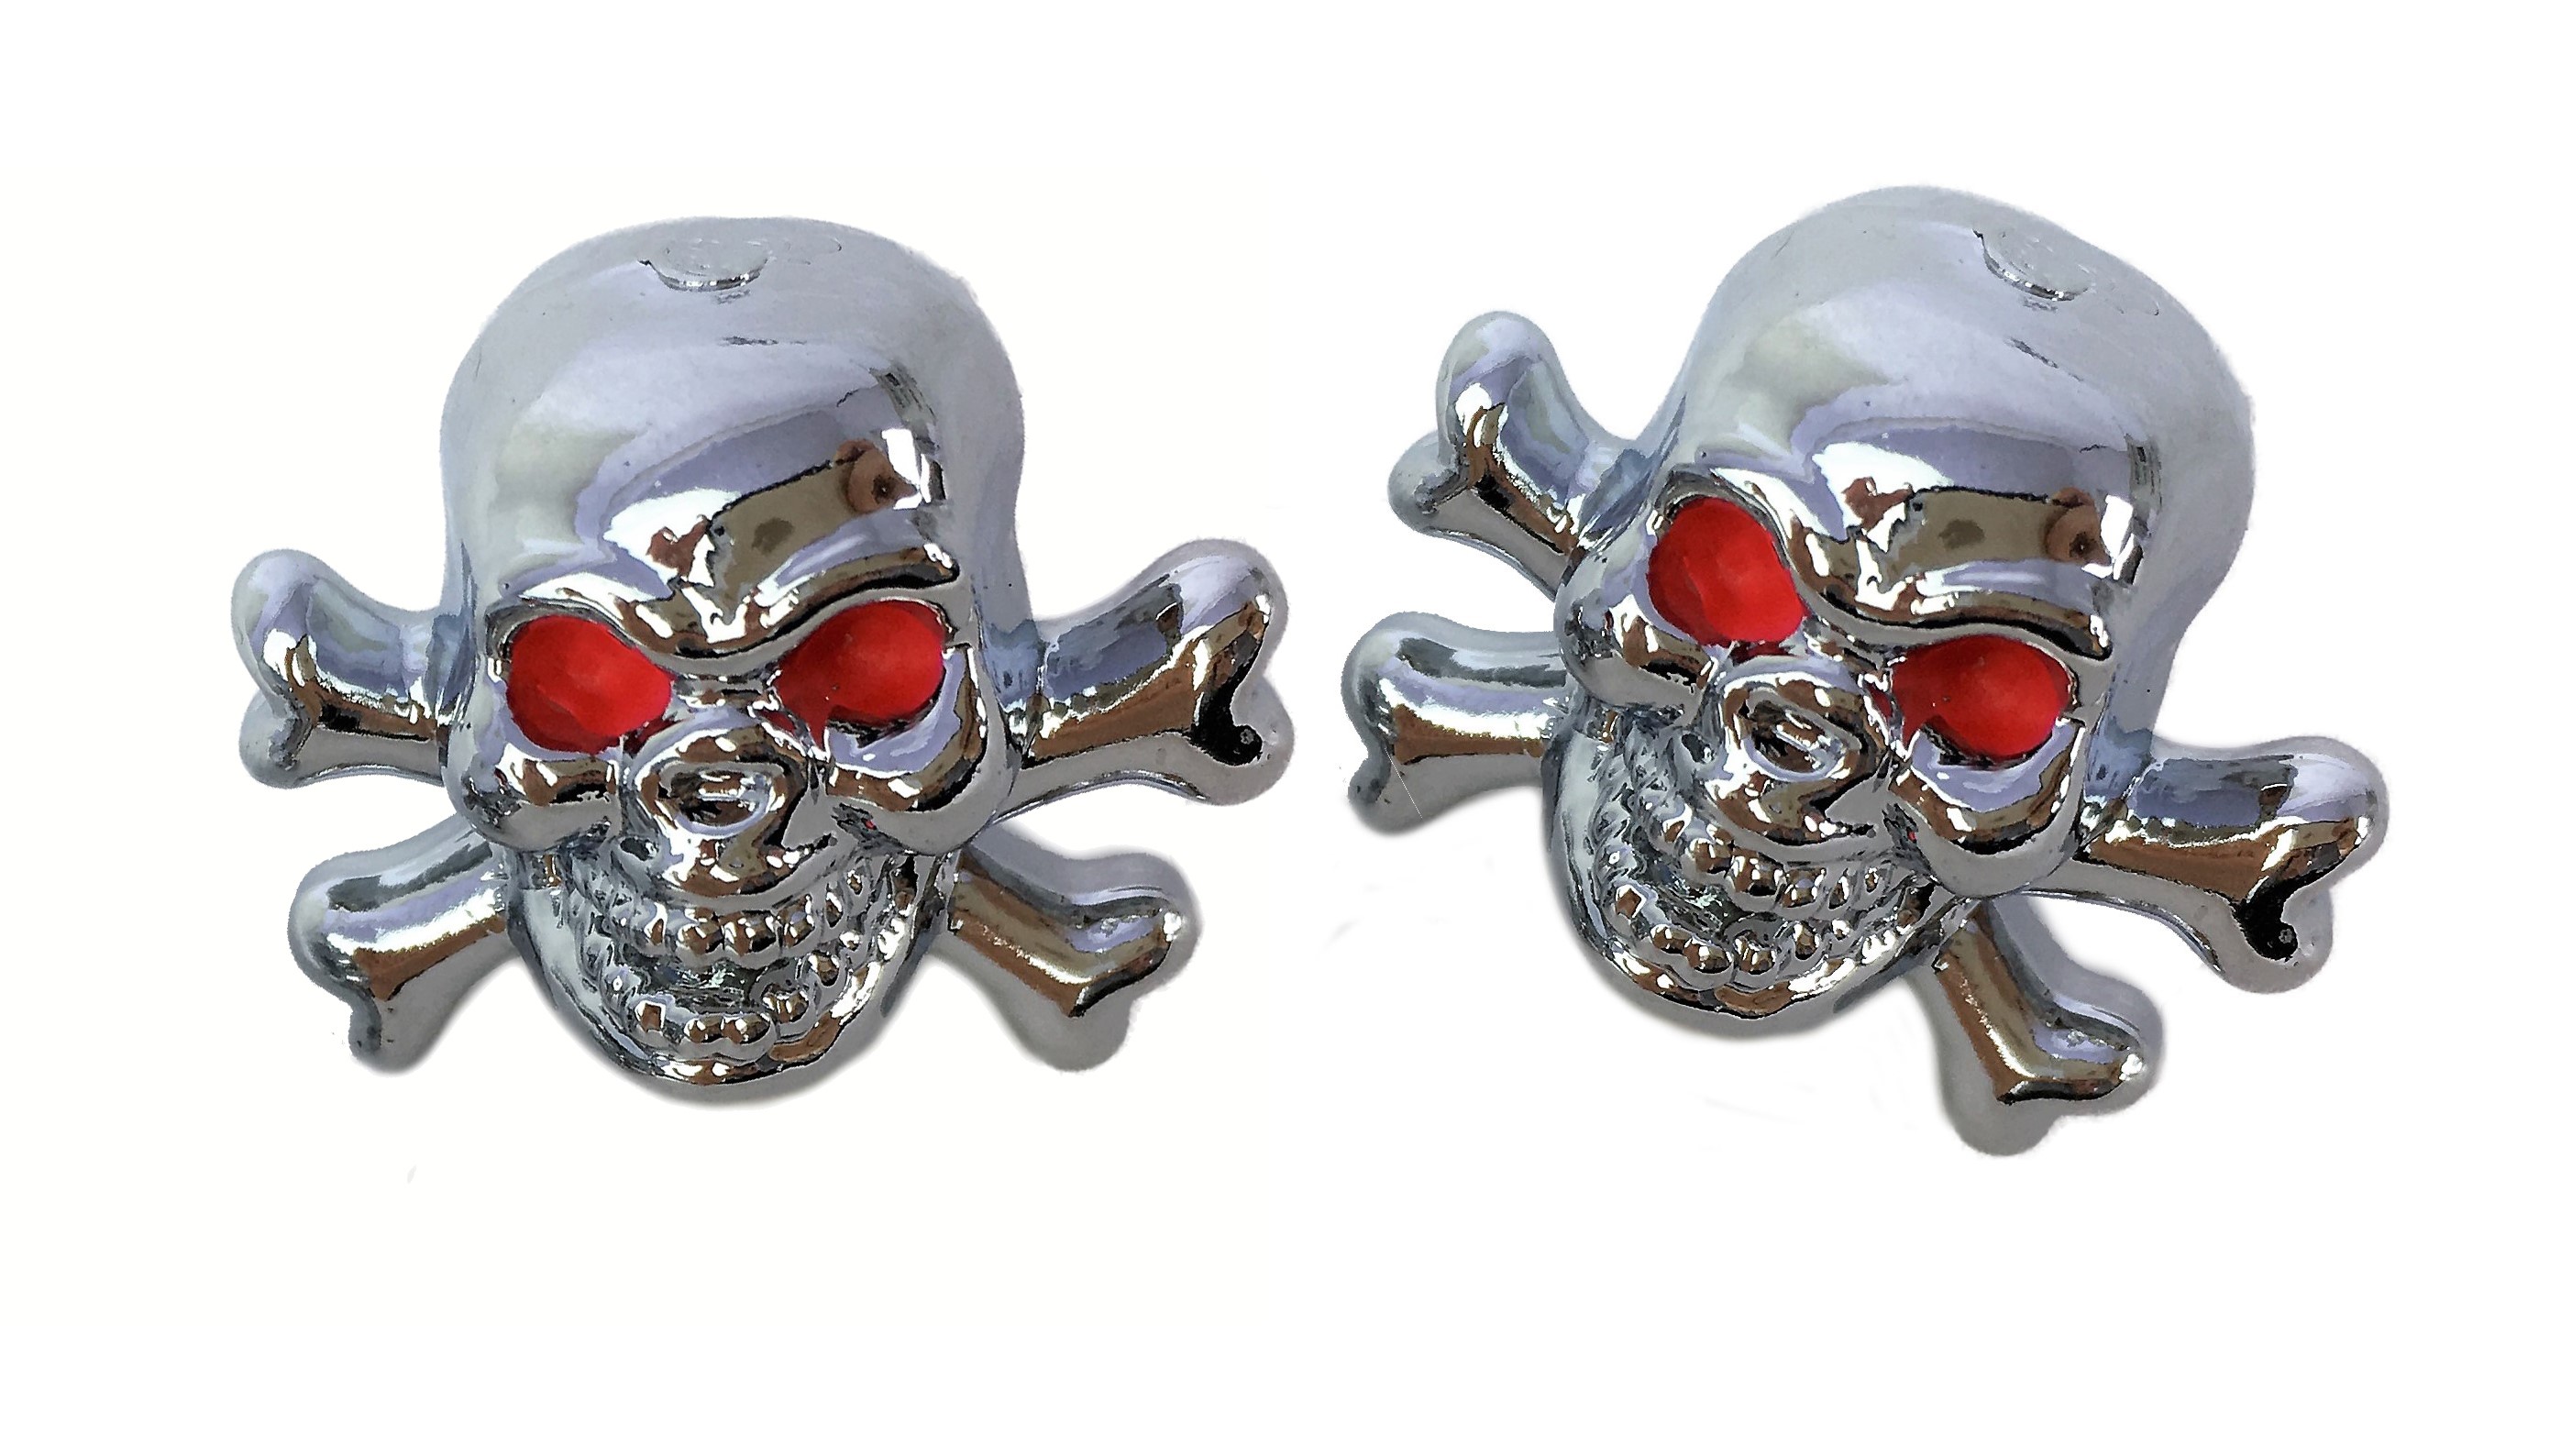 Valve Caps Skull / Deadhead with Crossed Bones, chrome